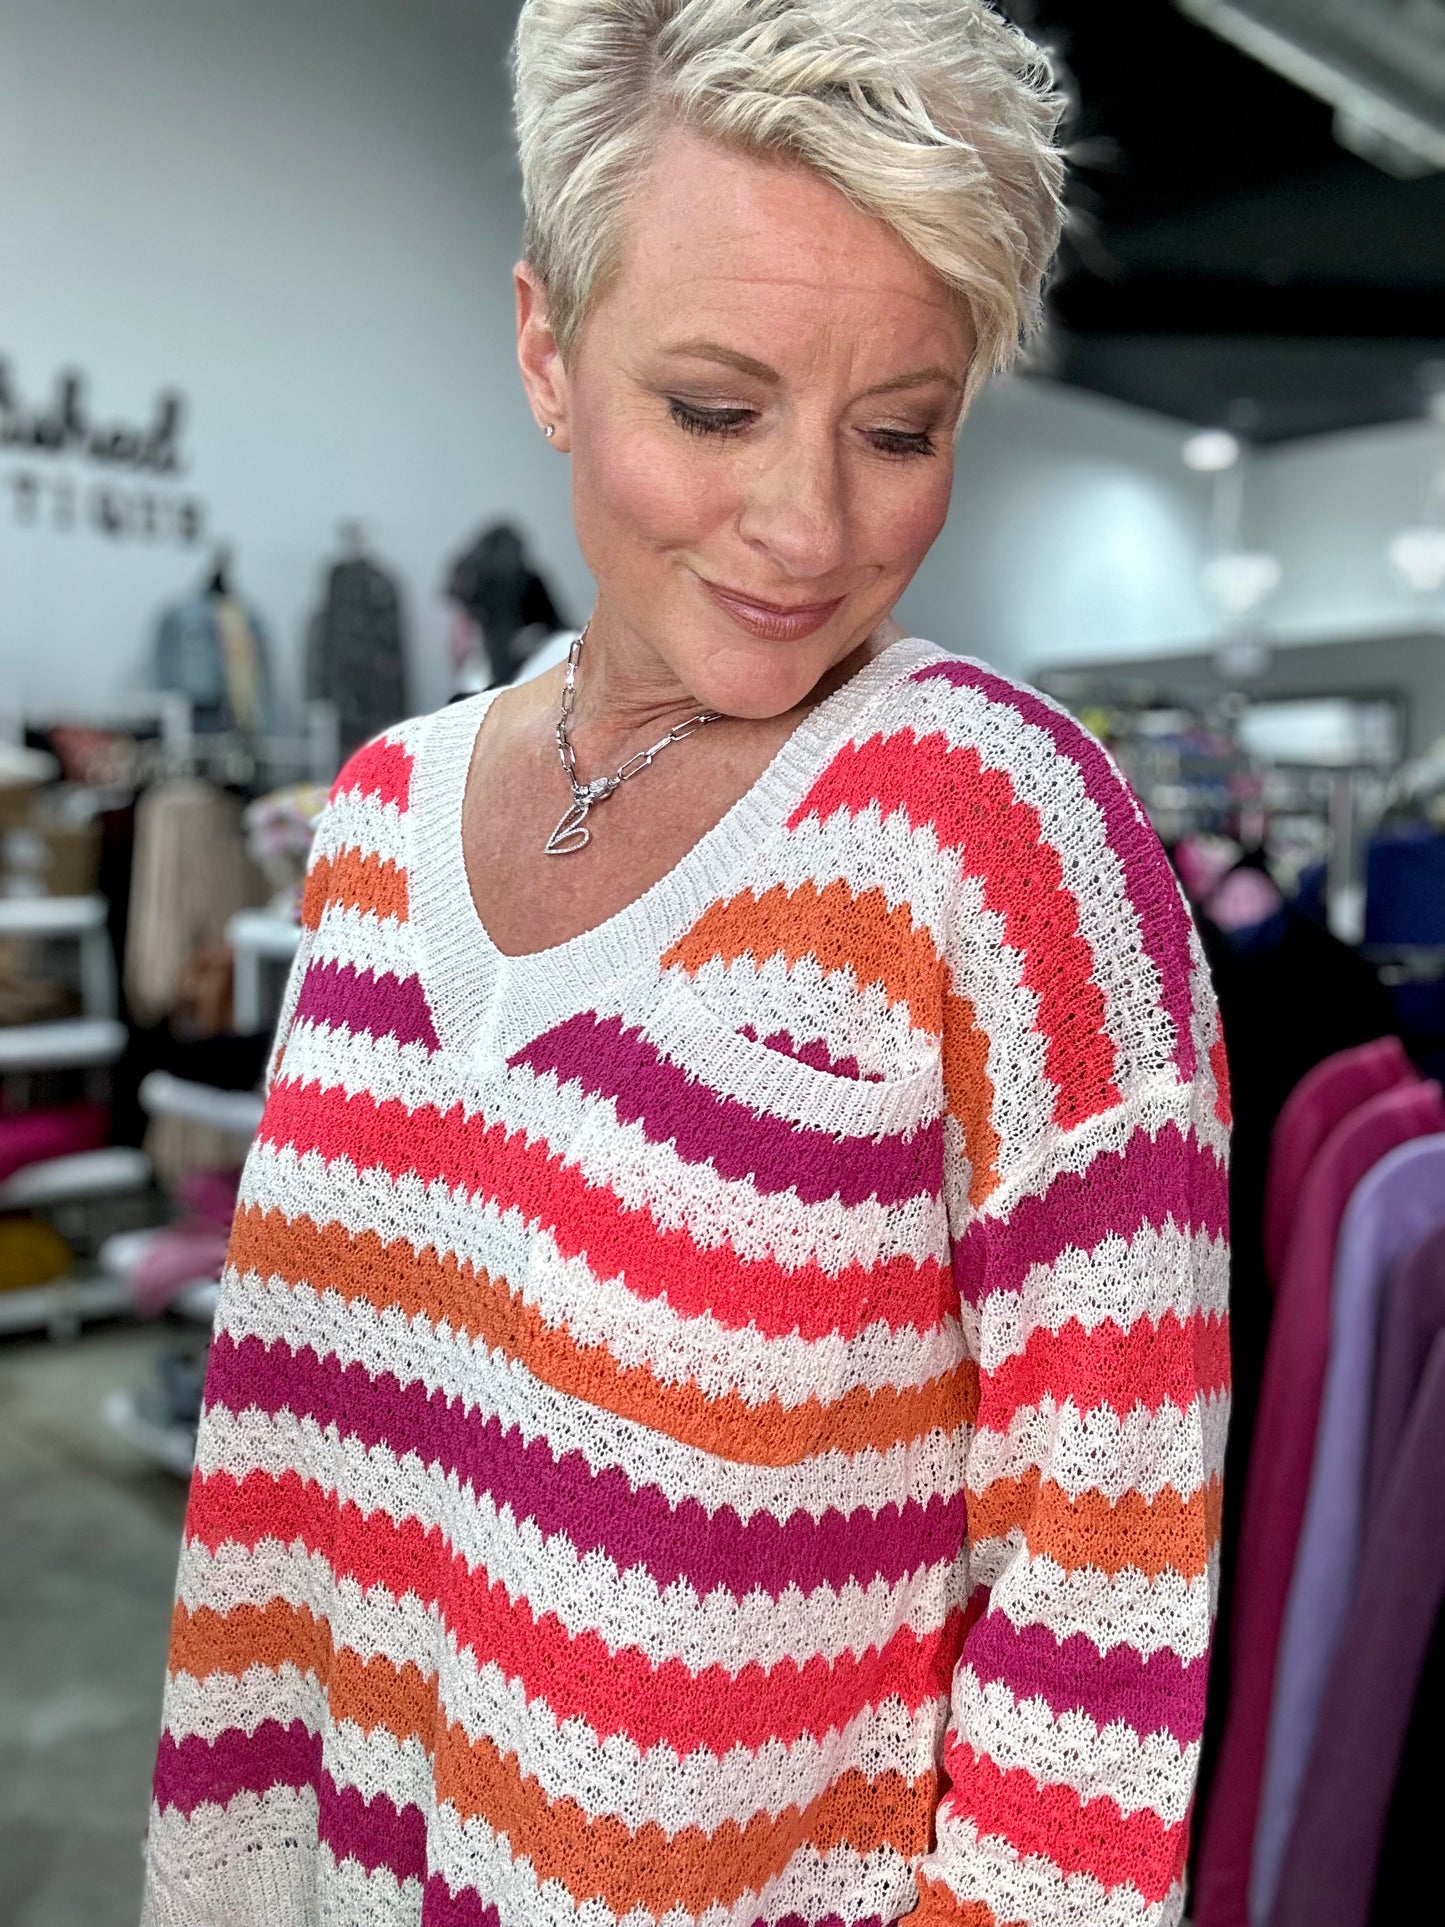 The Skyla Sweater